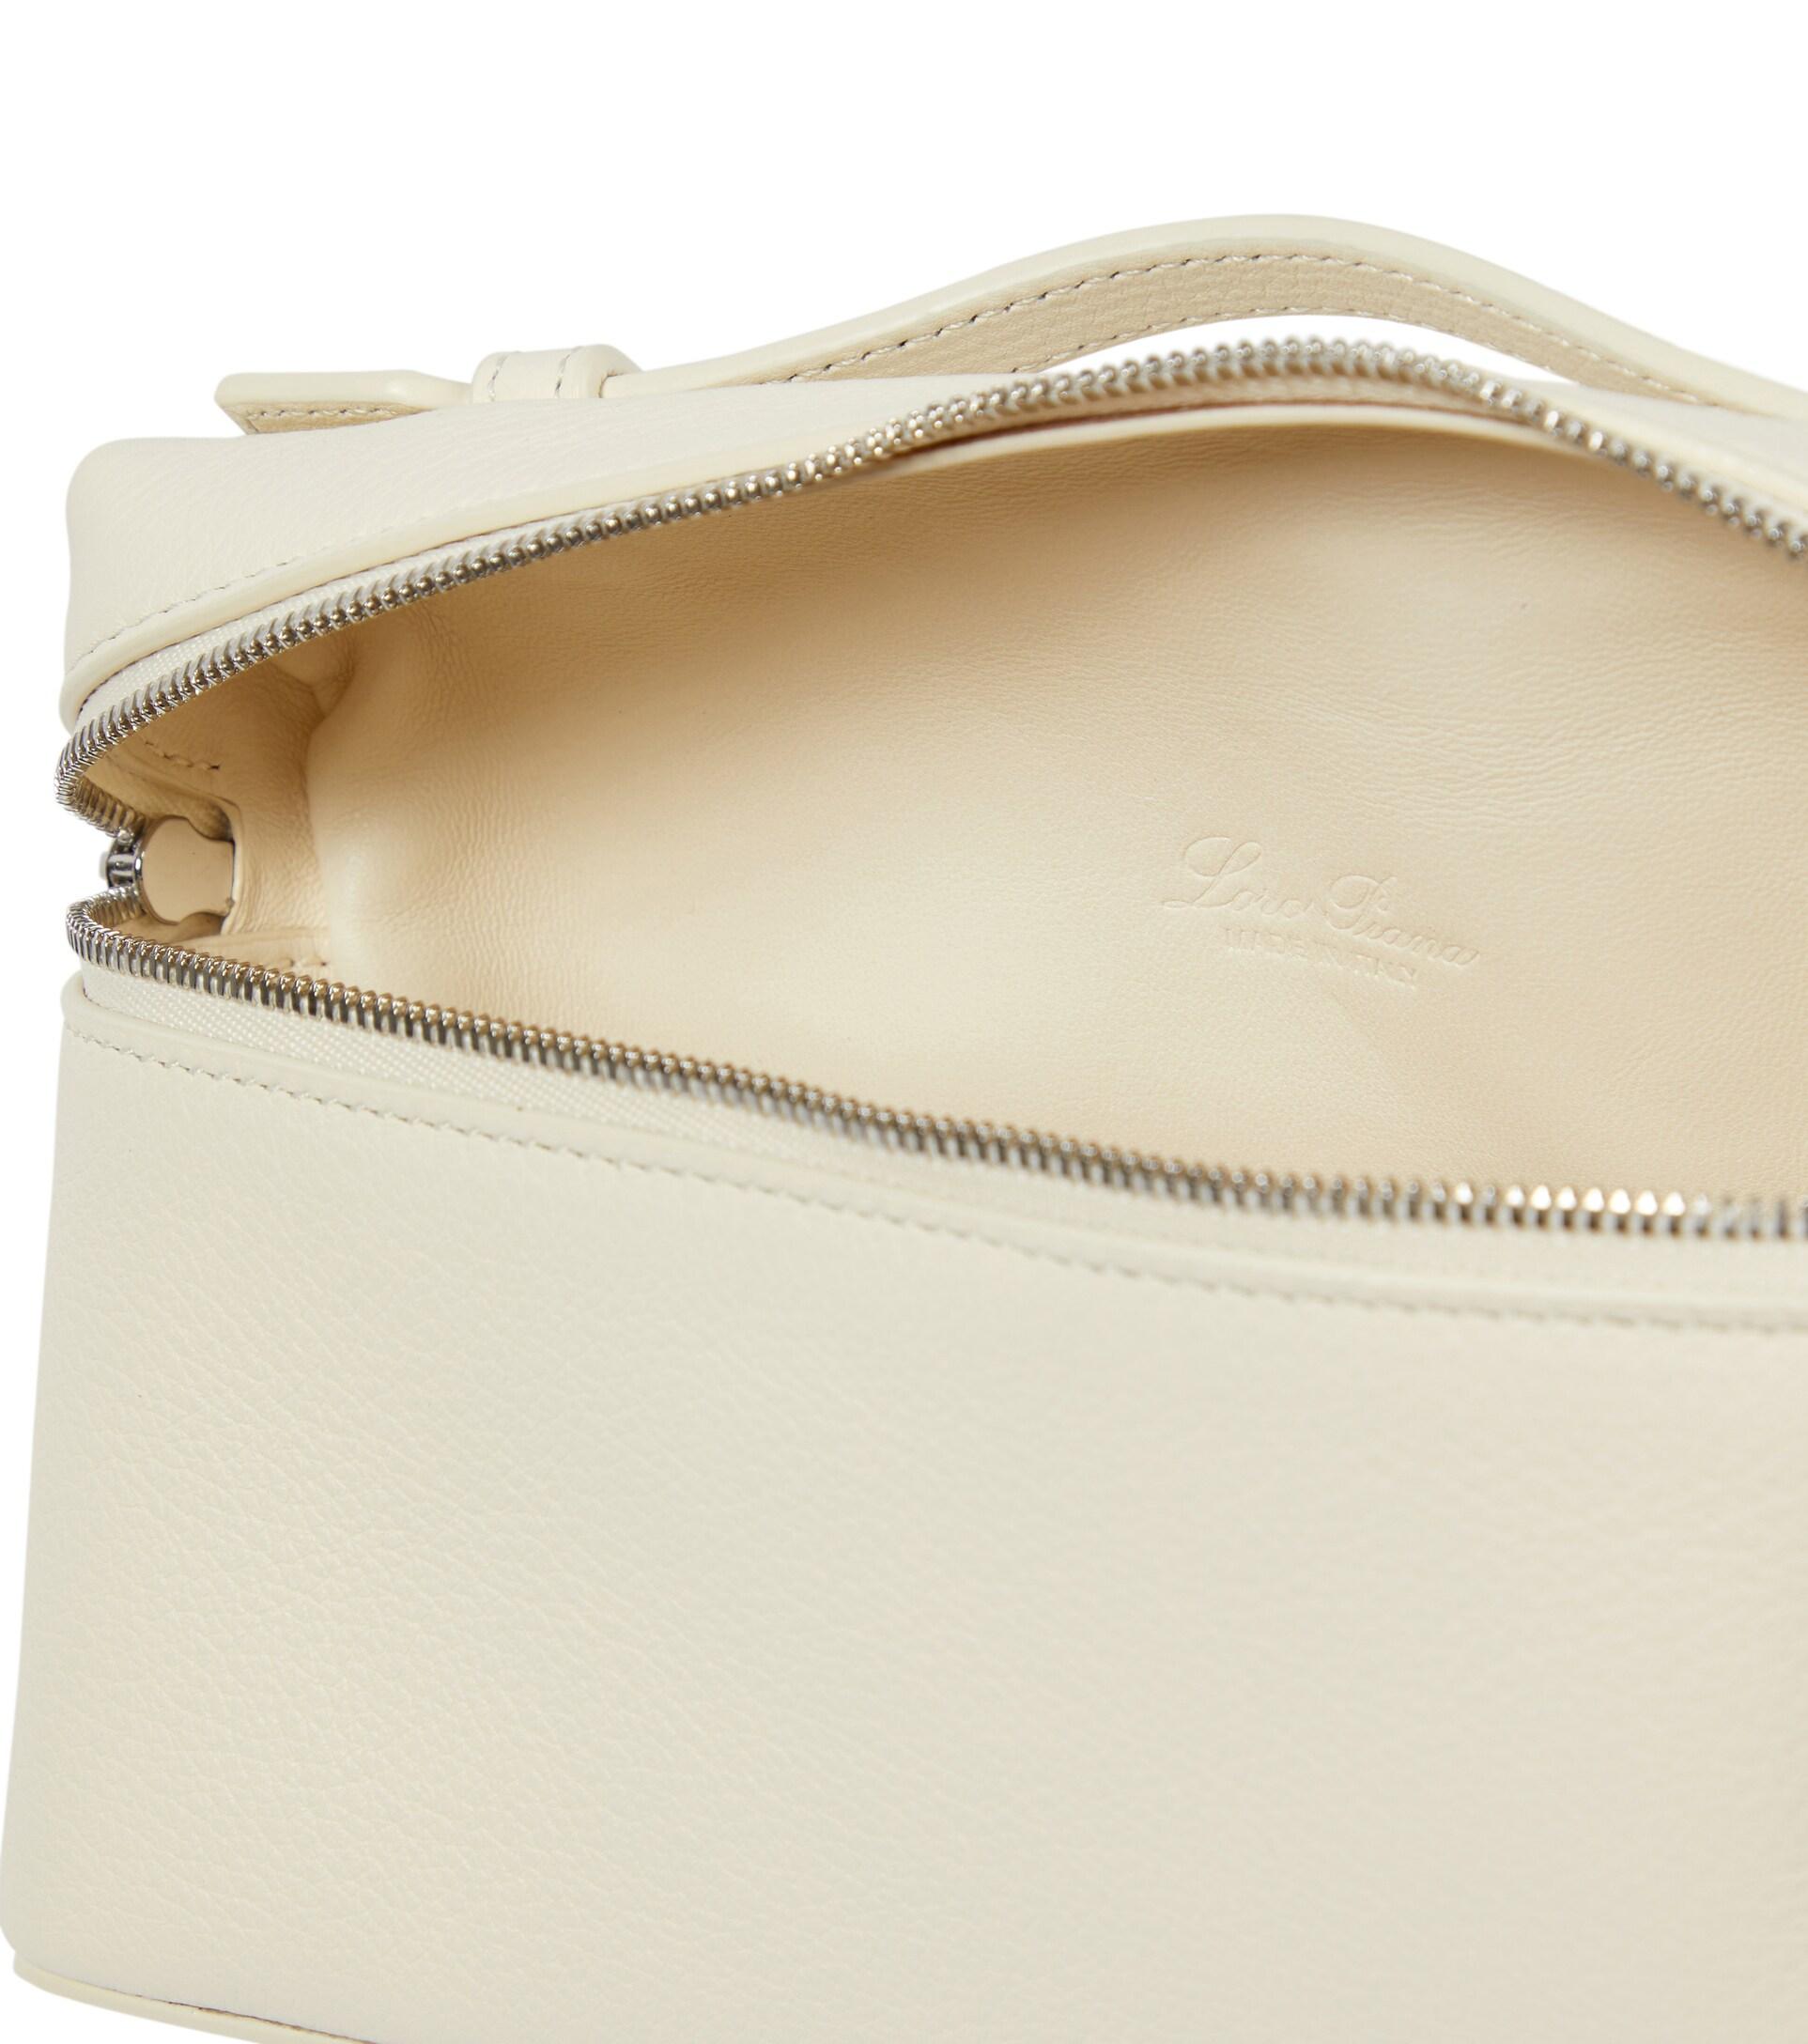 Loro Piana Bags Dubai - White Extra Pocket L19 Pouch Womens